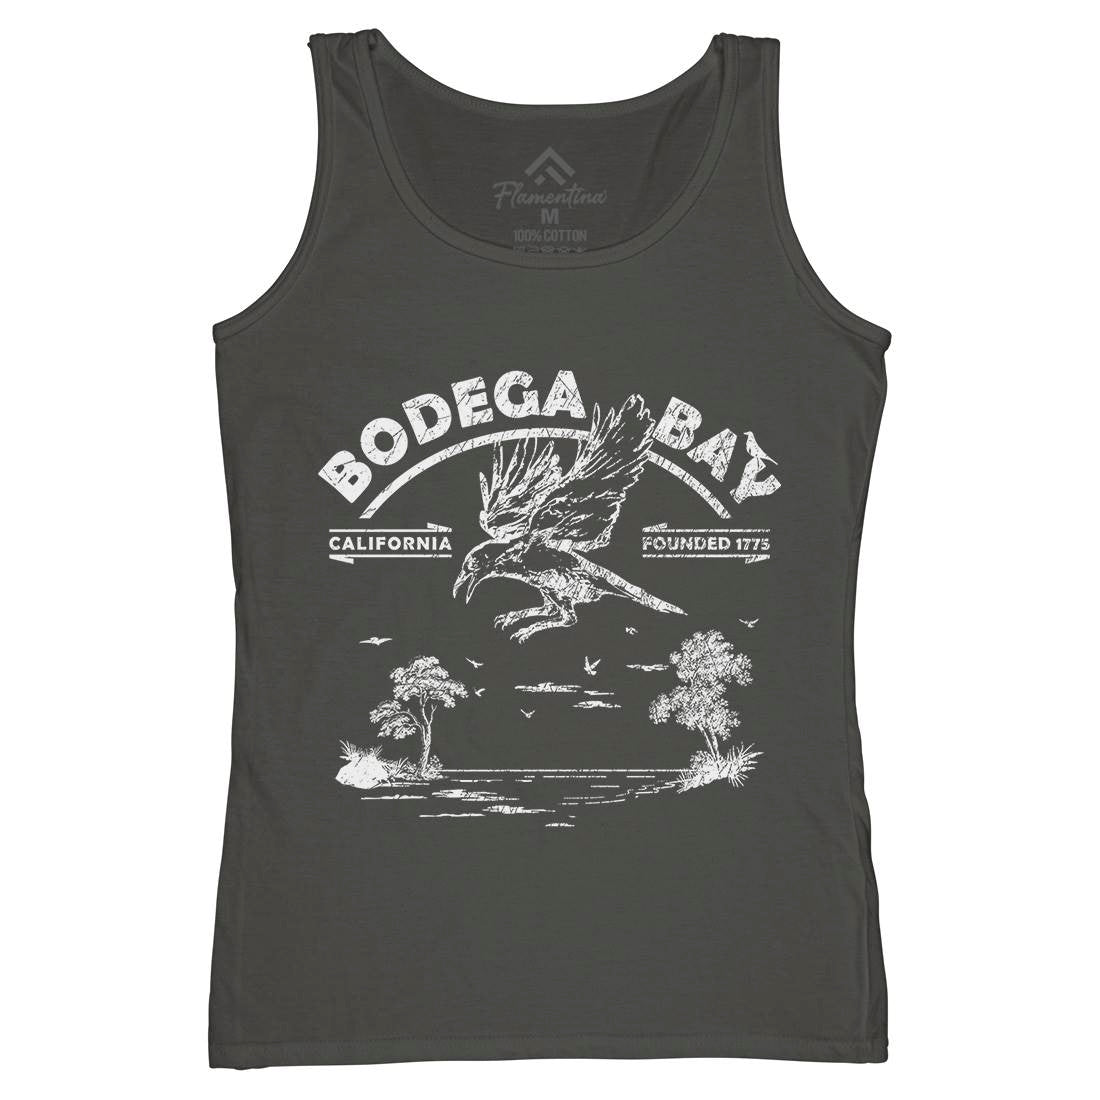 Bodega Bay Womens Organic Tank Top Vest Horror D310